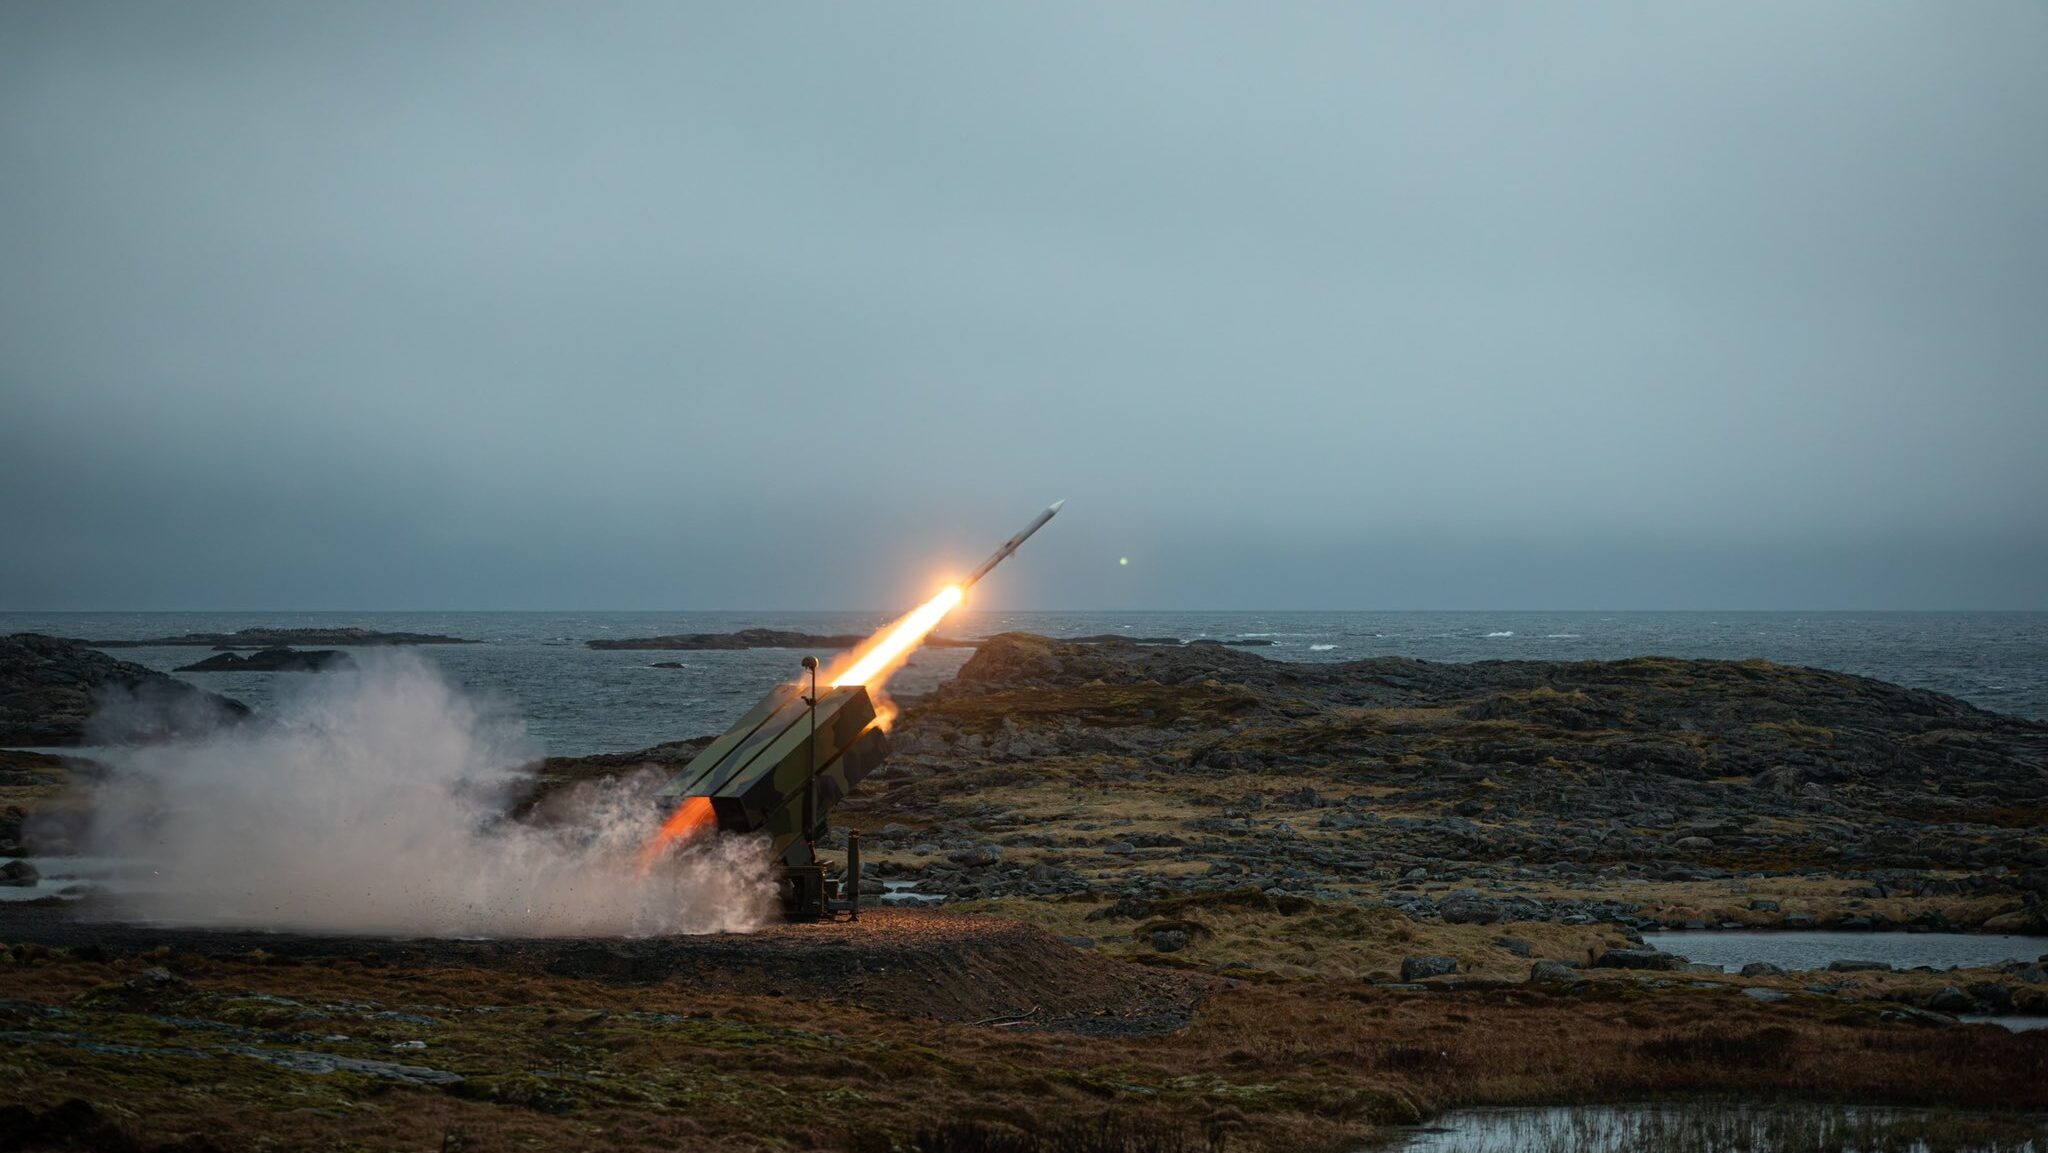 Norway, RTX and Kongsberg sign NASAMS air defense cooperation agreement